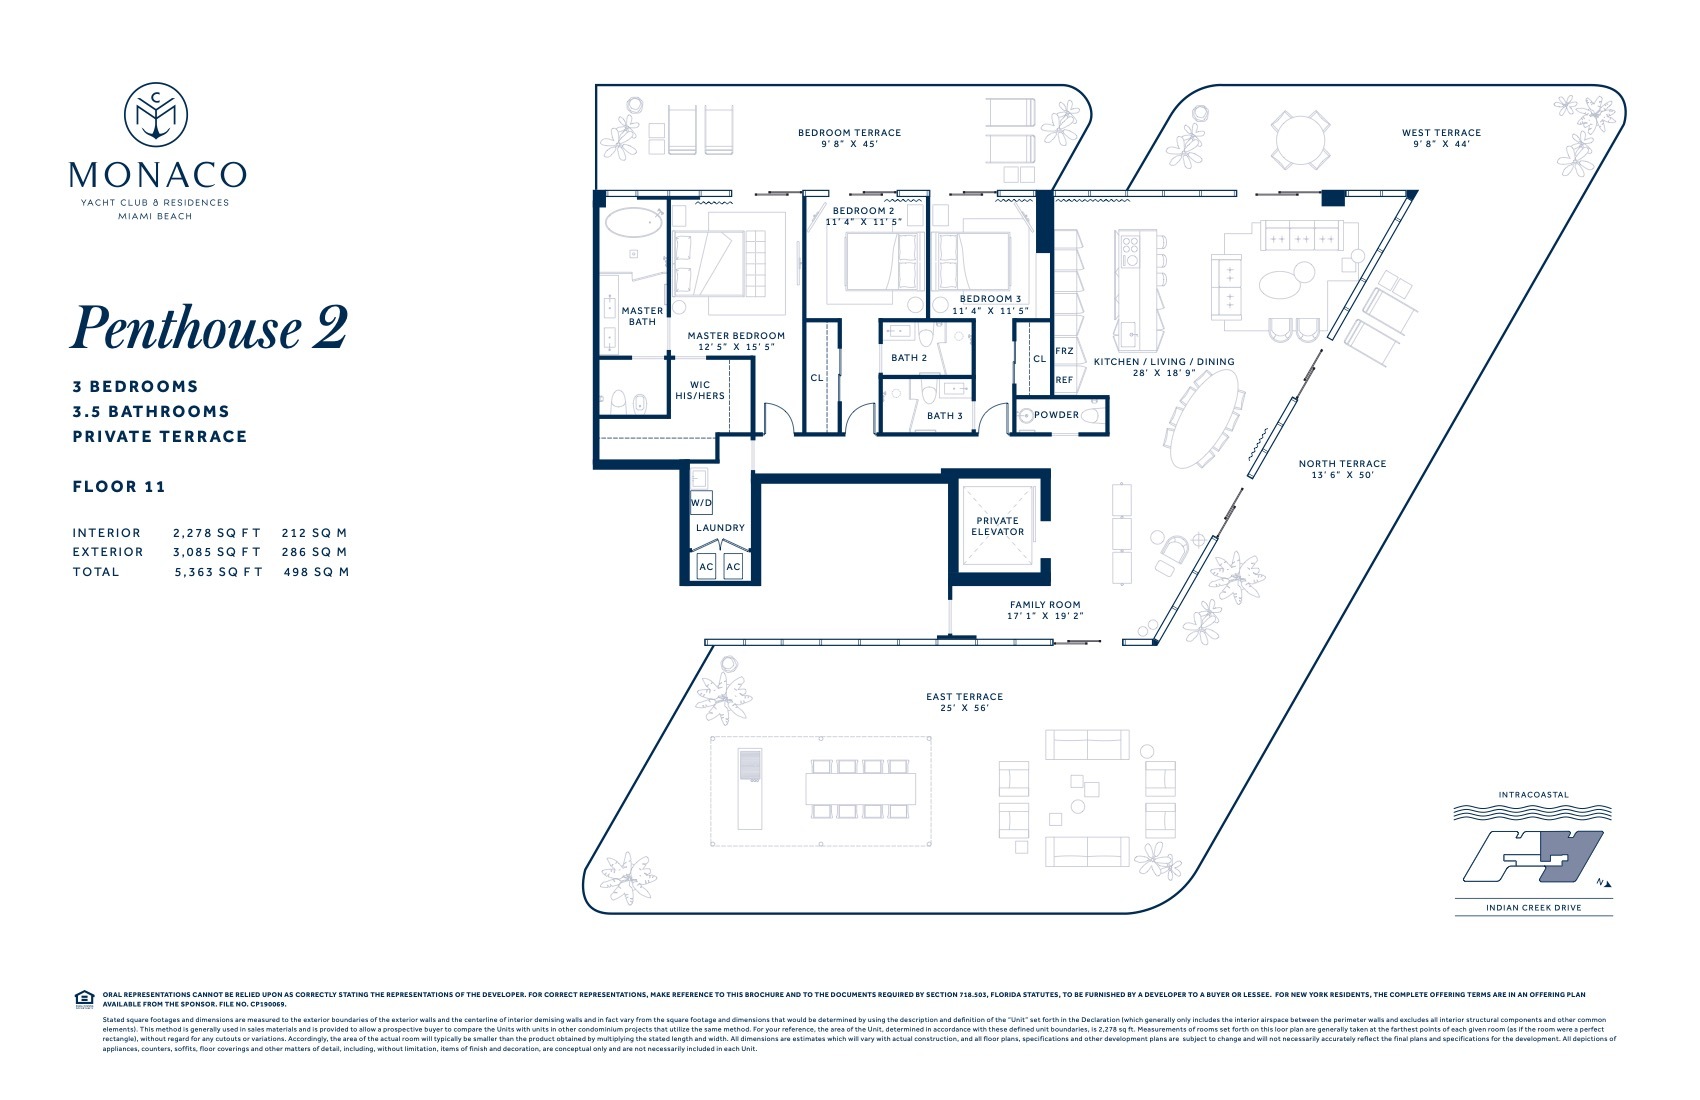 Floor Plan for Monaco Yacht Club Floorplans, Penthouse 2